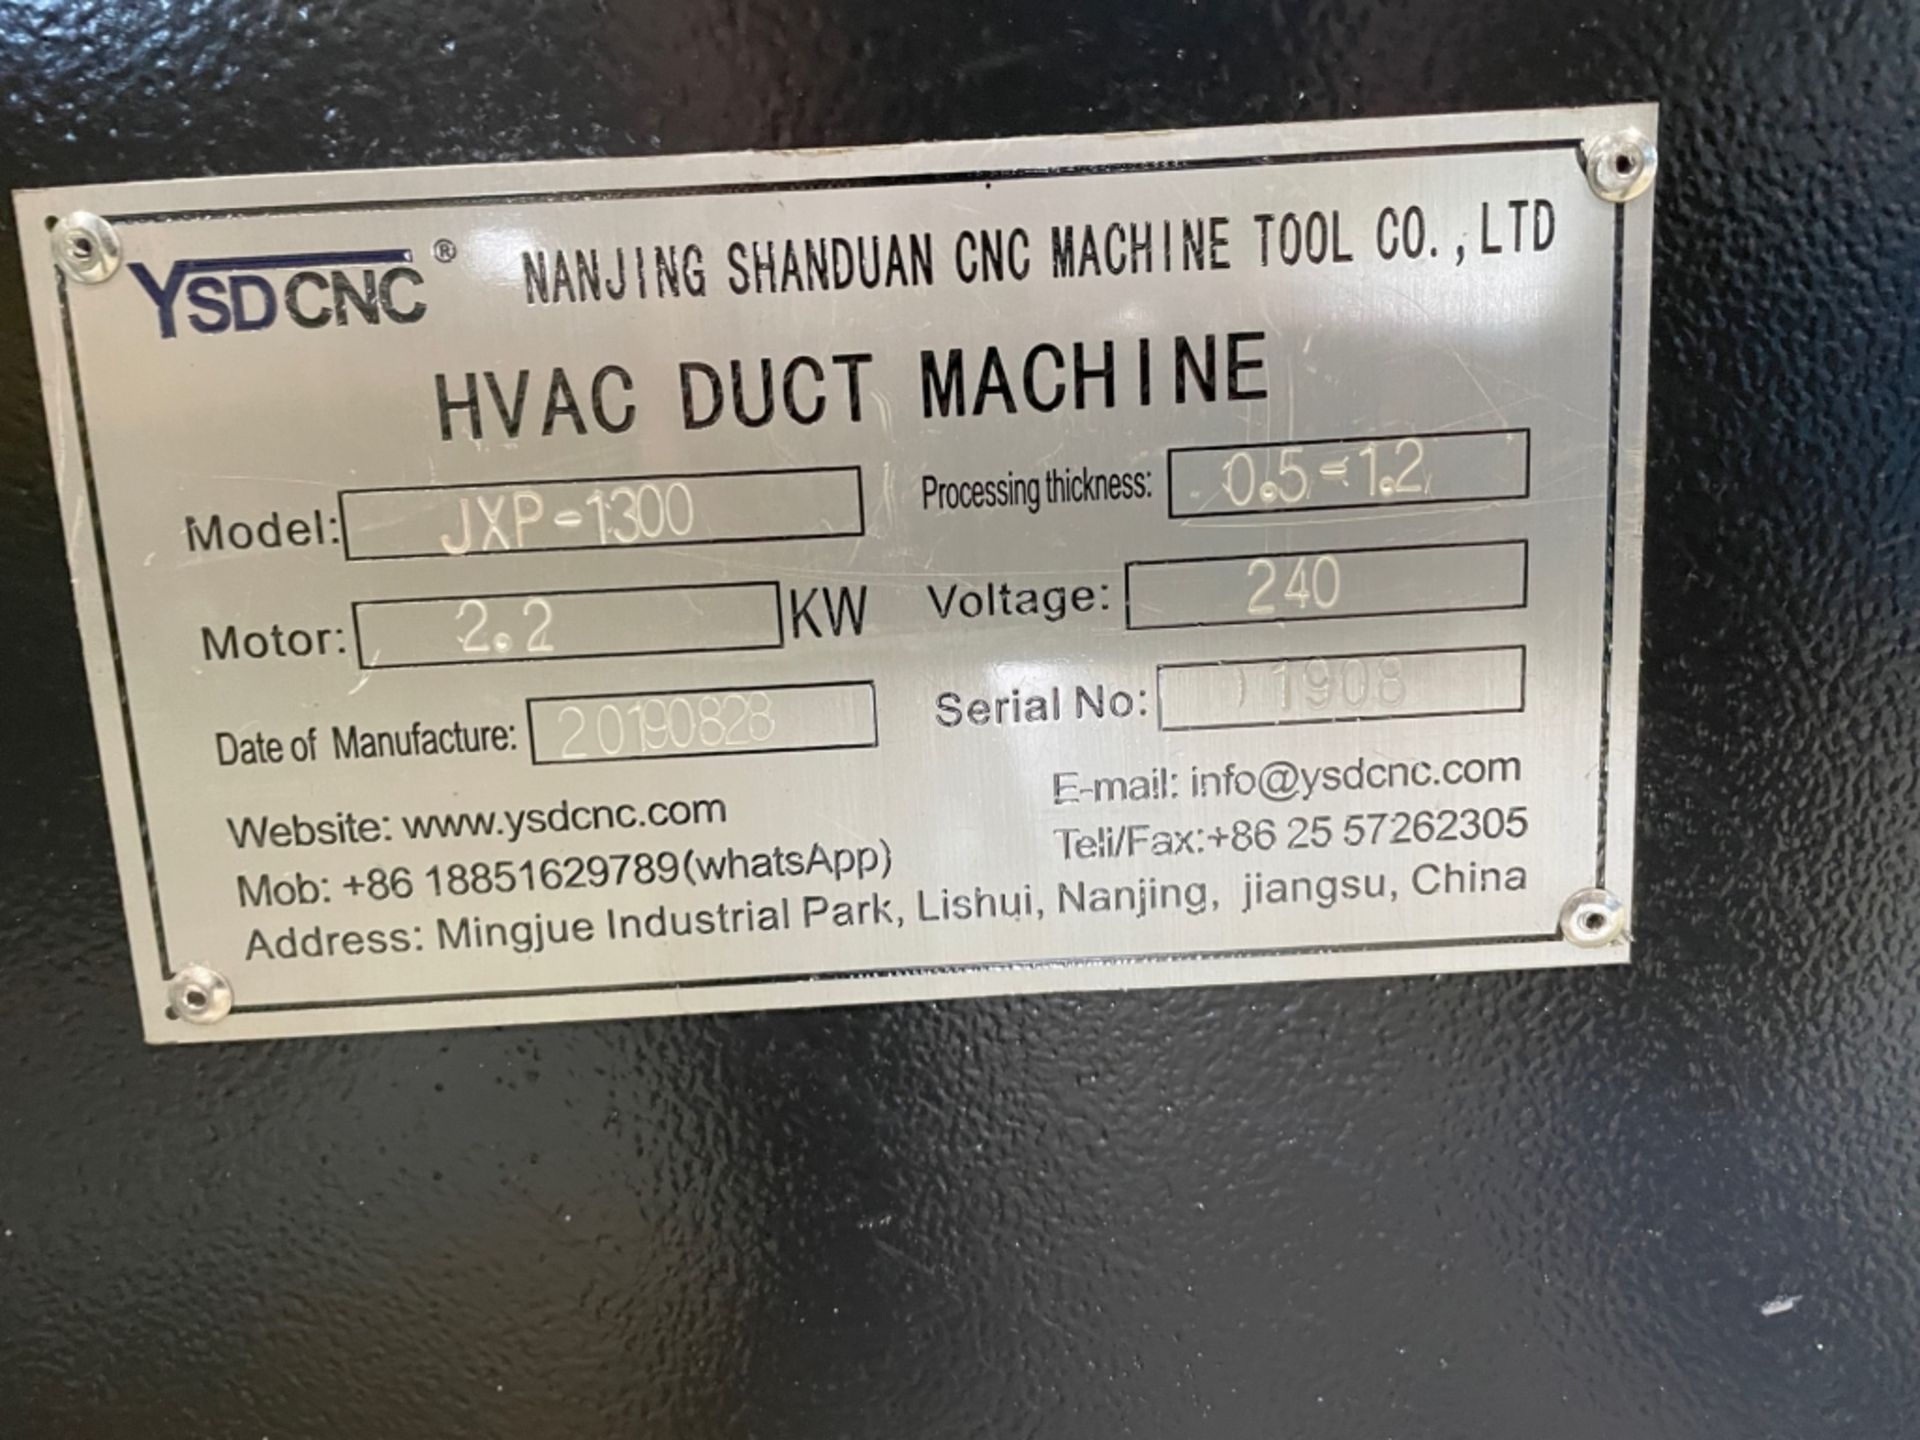 YSDCNC DUCT BEADING MACHINE 4'X18GA, MOD: JXP-1300, SN: 1908, 3 PHASES, USED TO MAKE 7 REINFORCED - Image 4 of 4